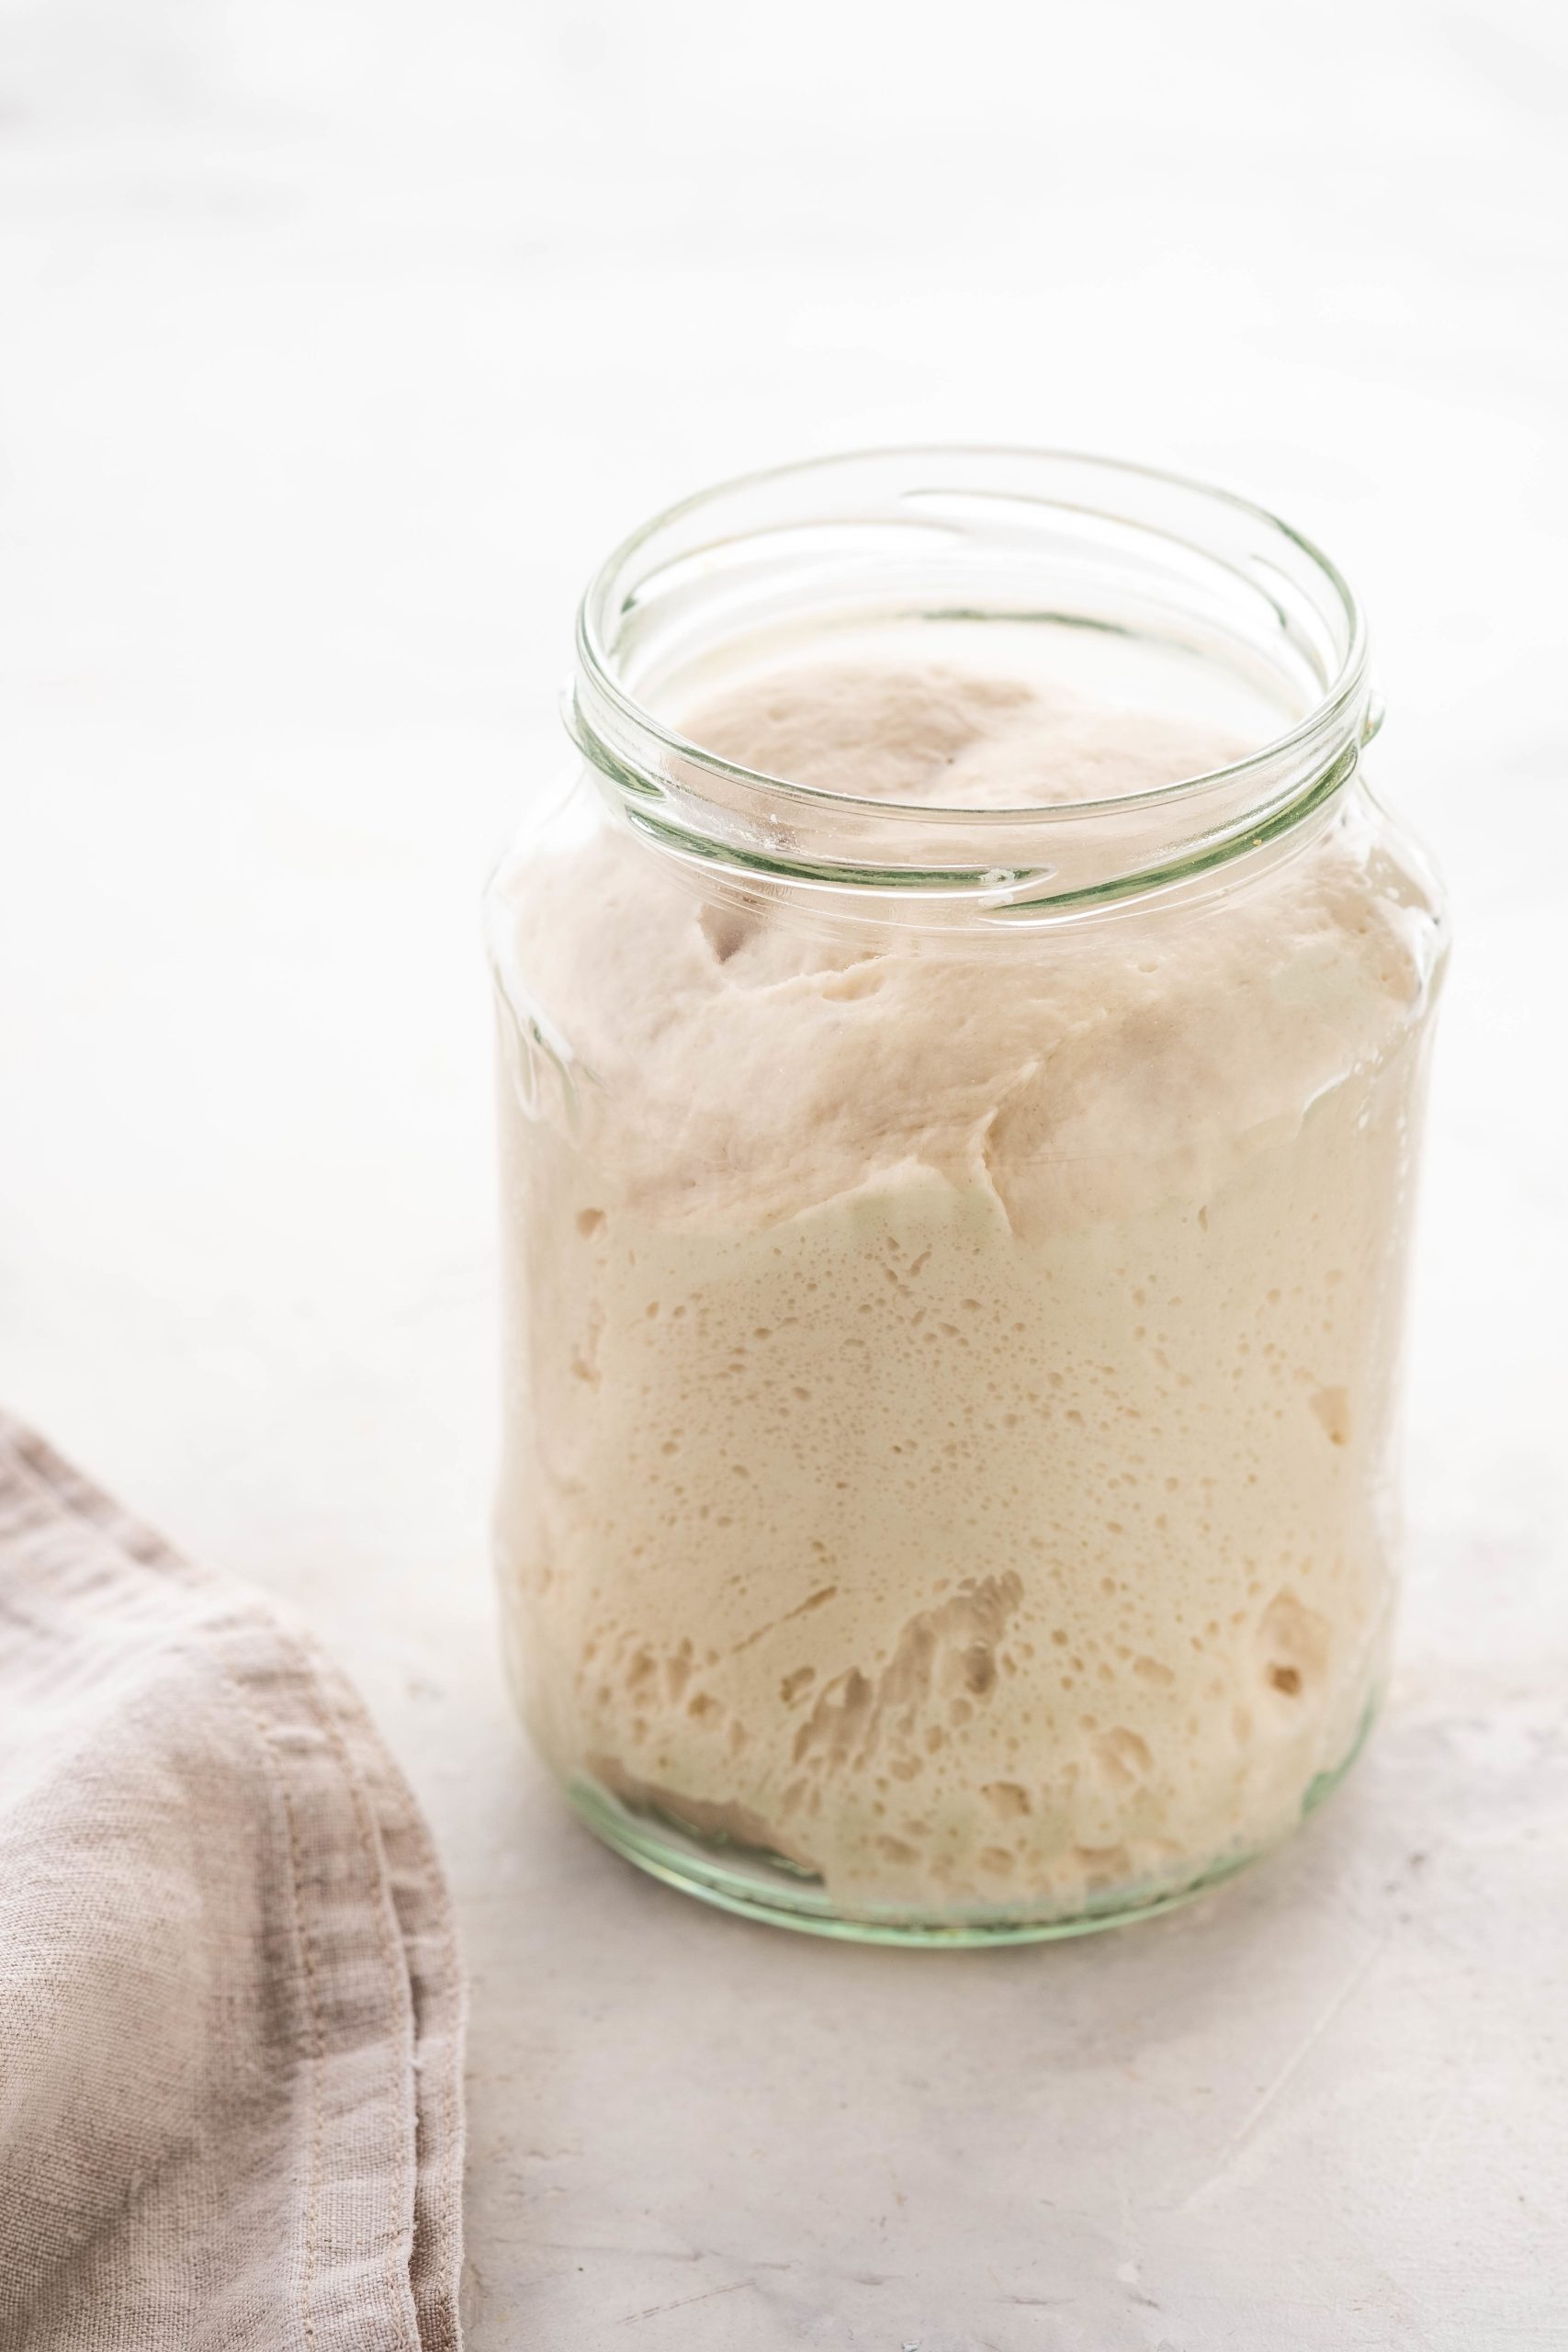 Make sourdough starter by catching wild yeast